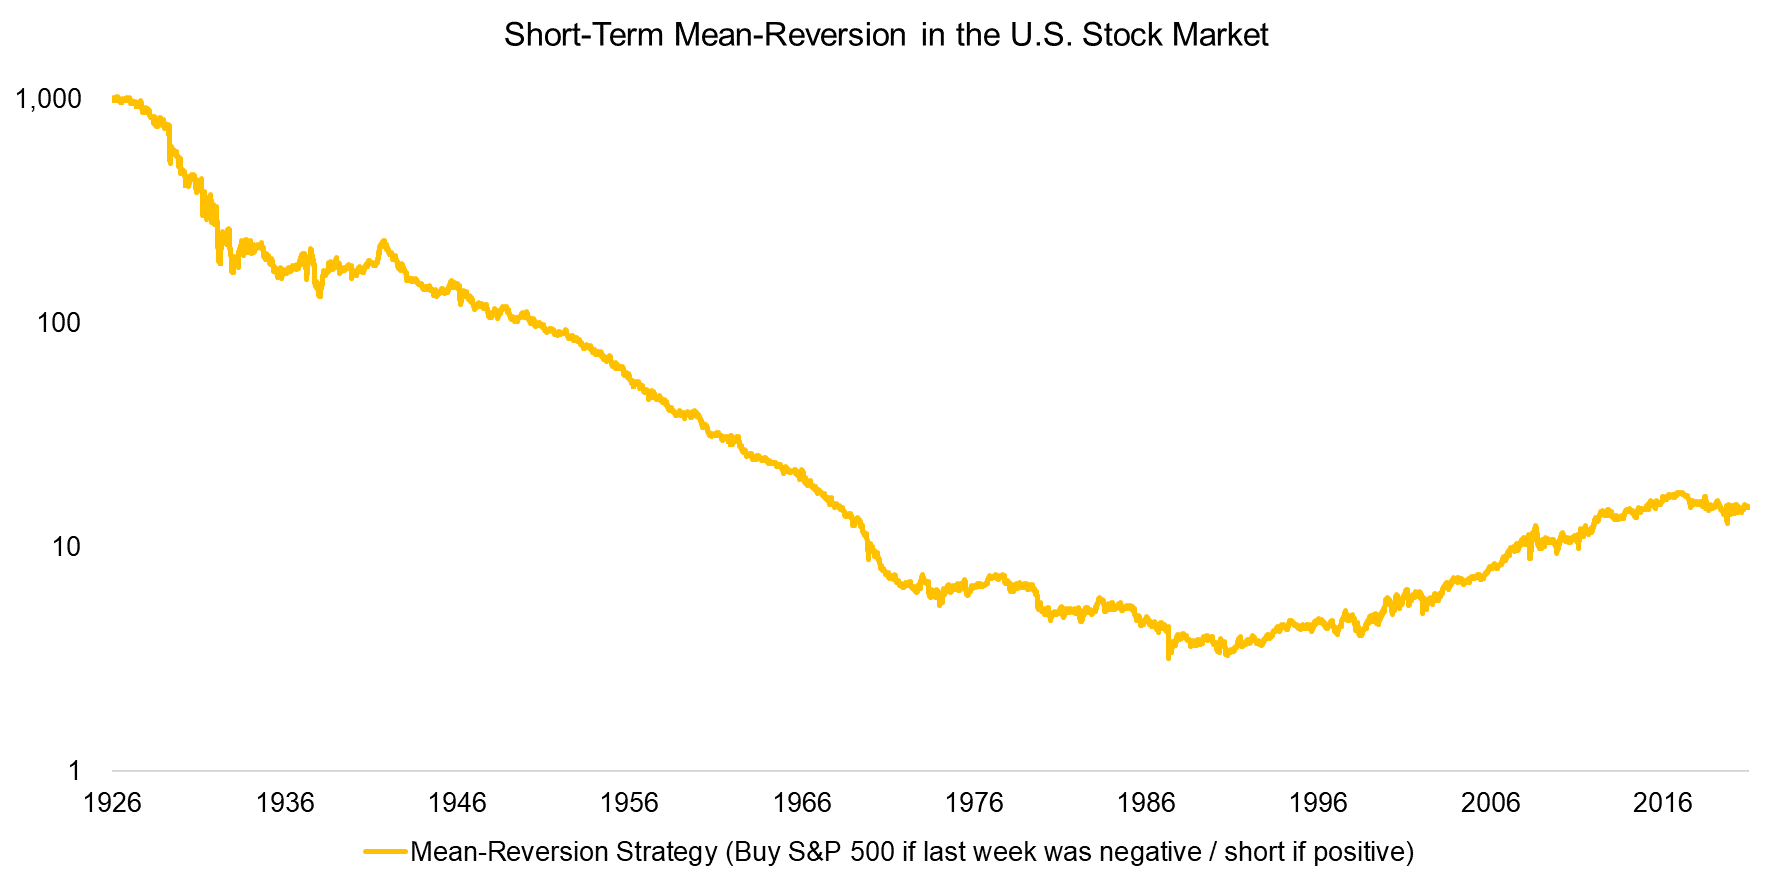 Short-Term Mean-Reversion in the U.S. Stock Market